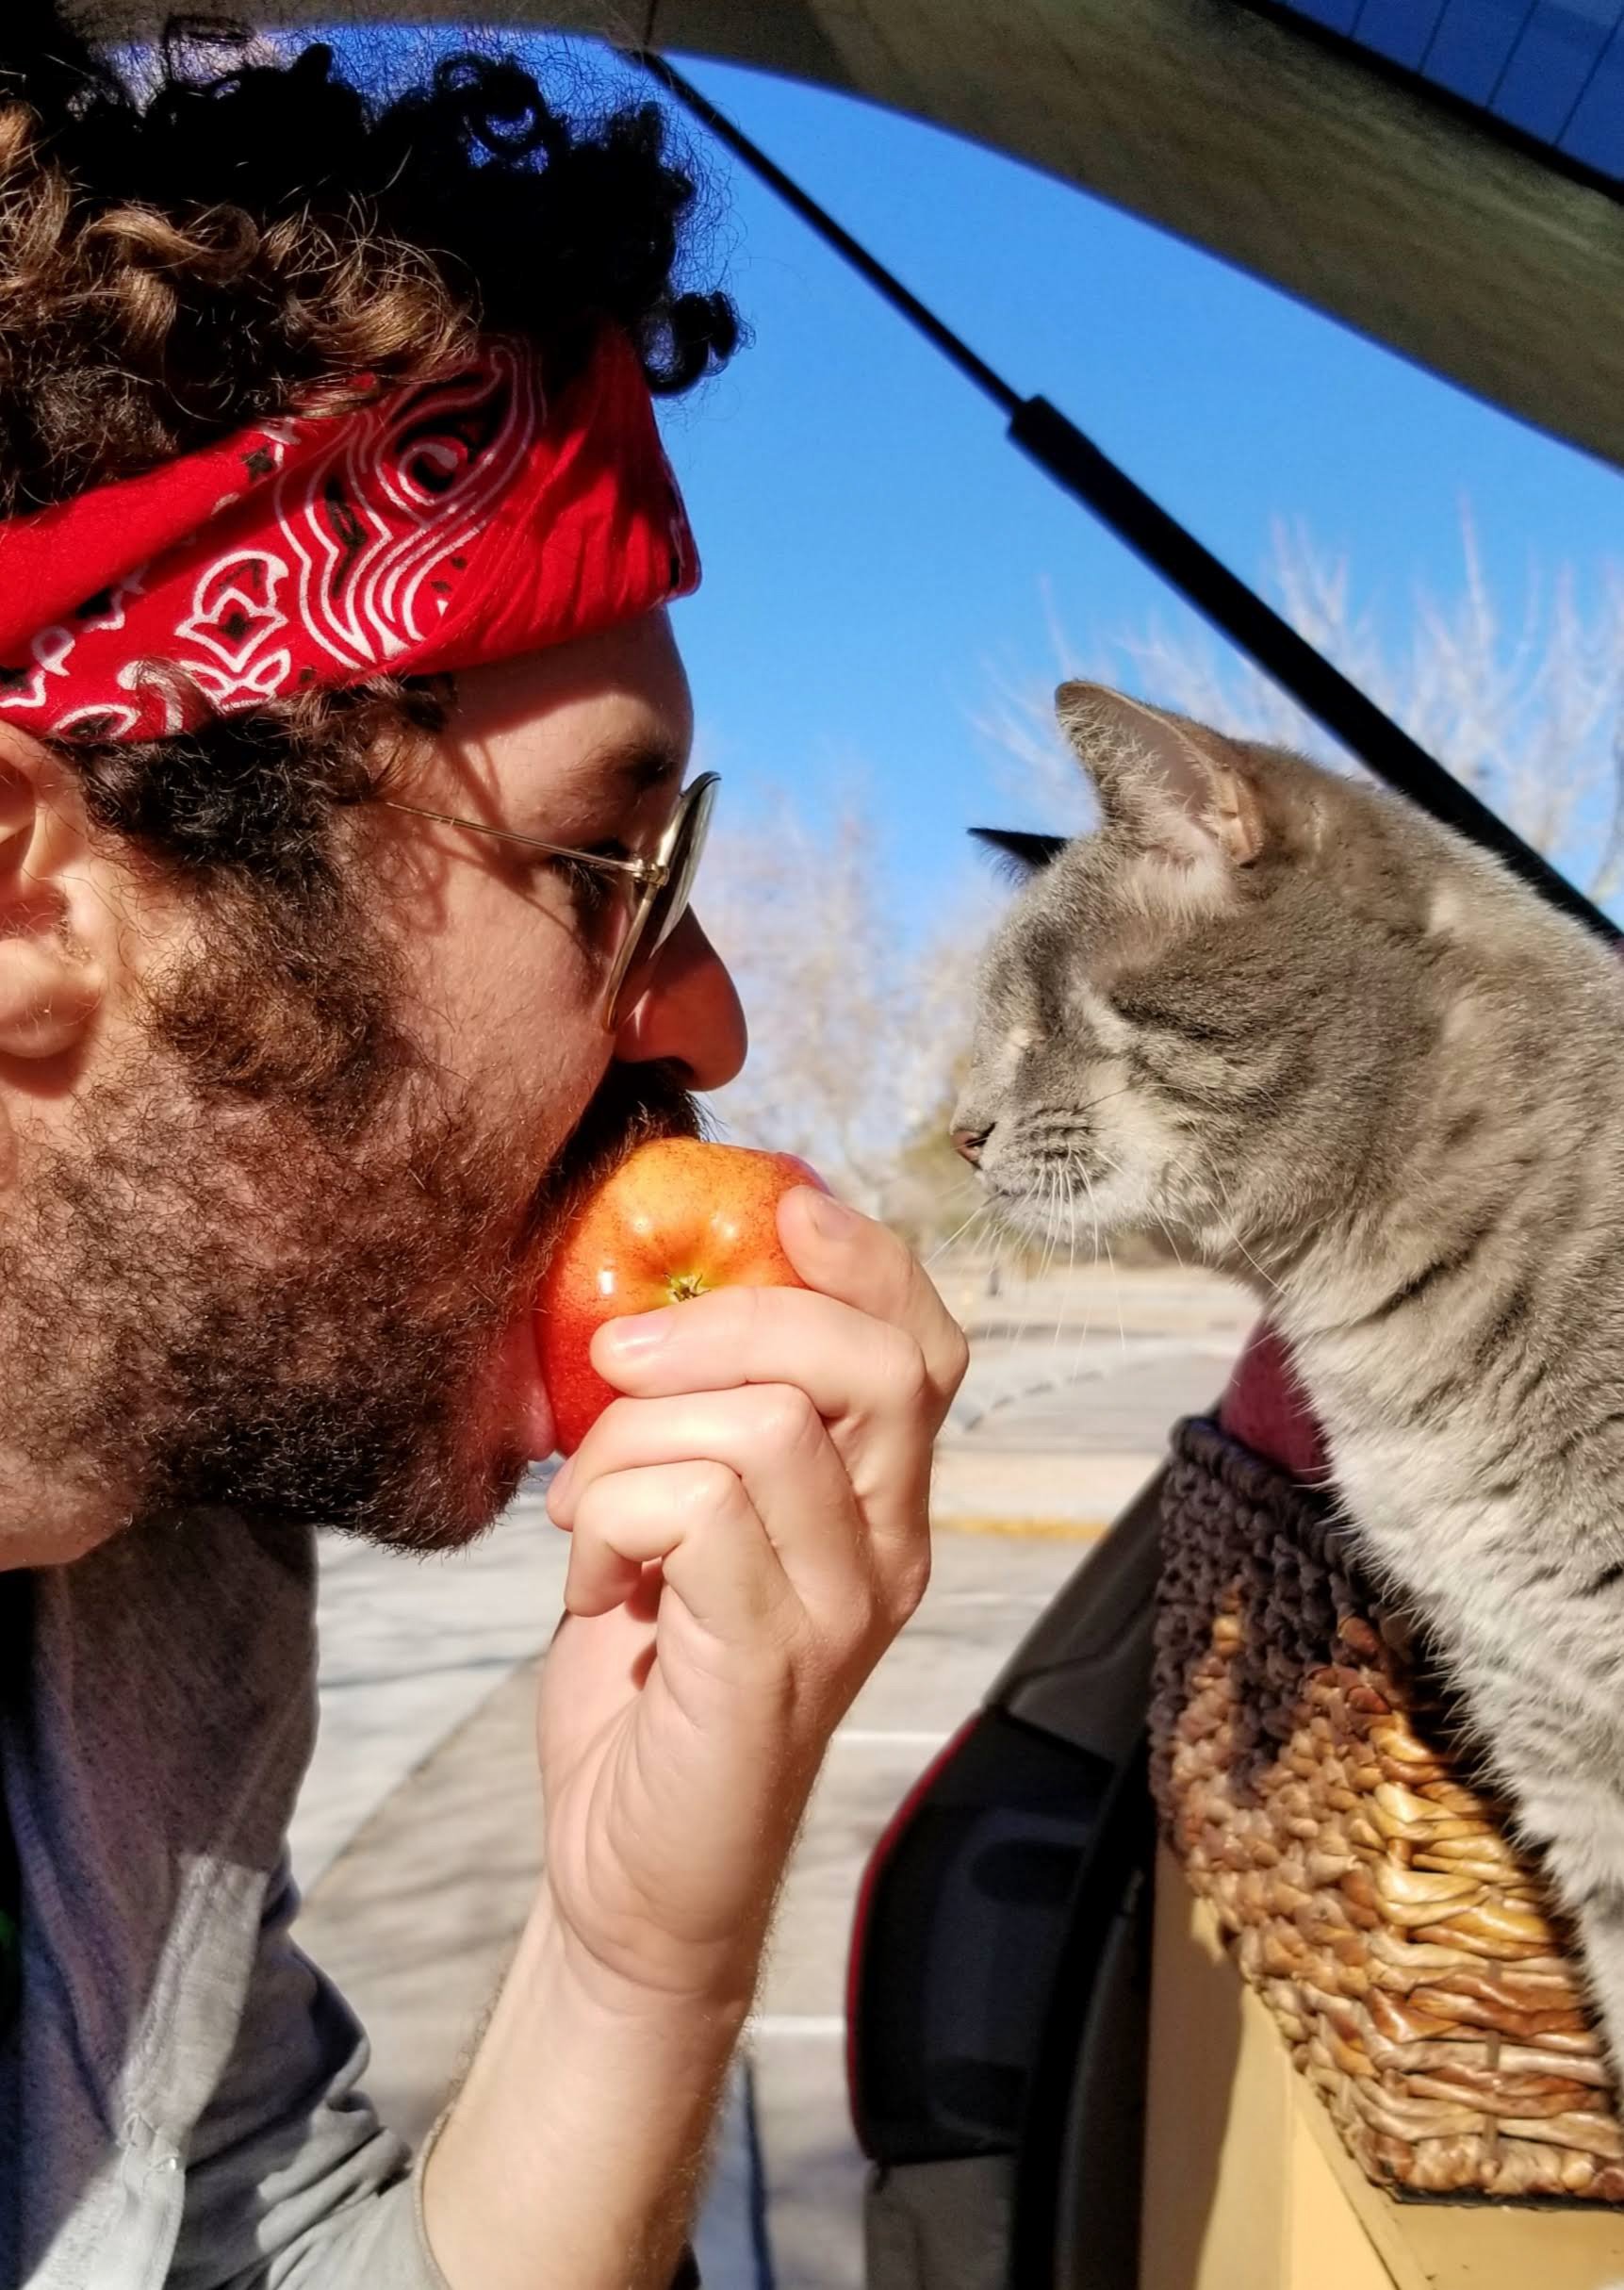 Samus wants that apple